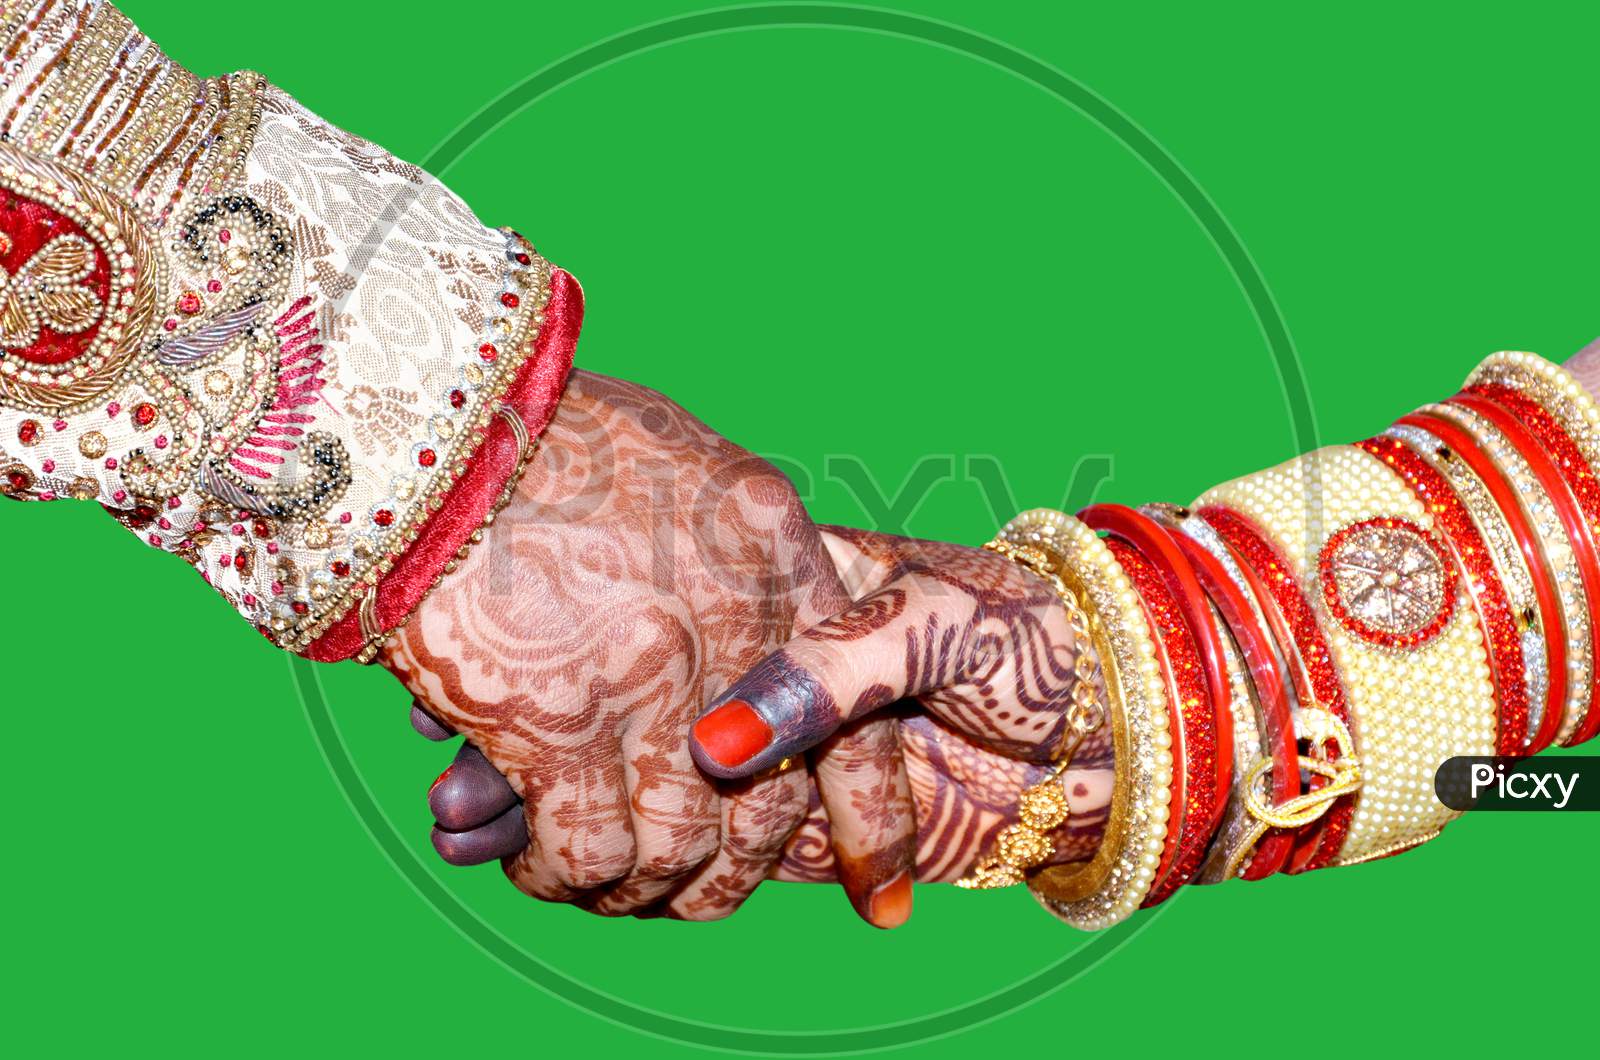 Bride & Groom Hands Together In Indian Wedding